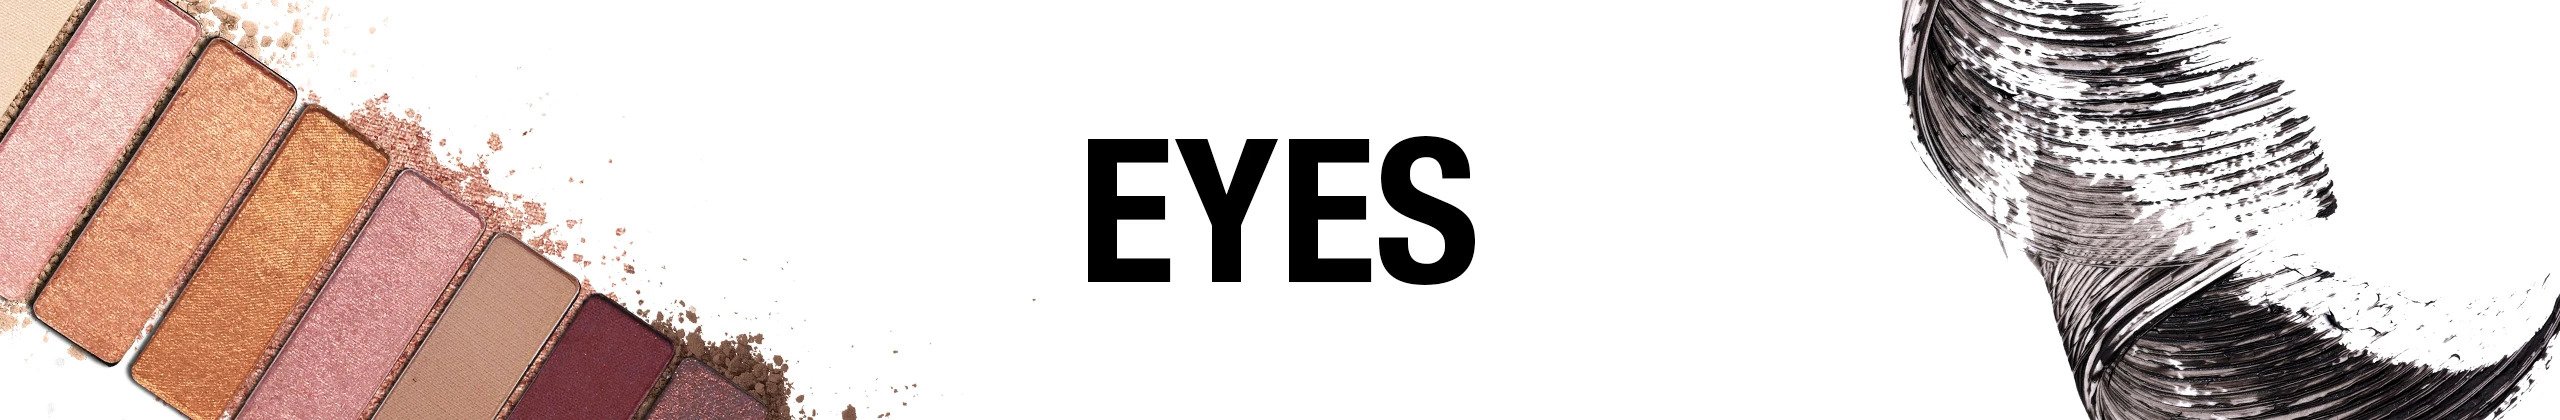 Eye Banner